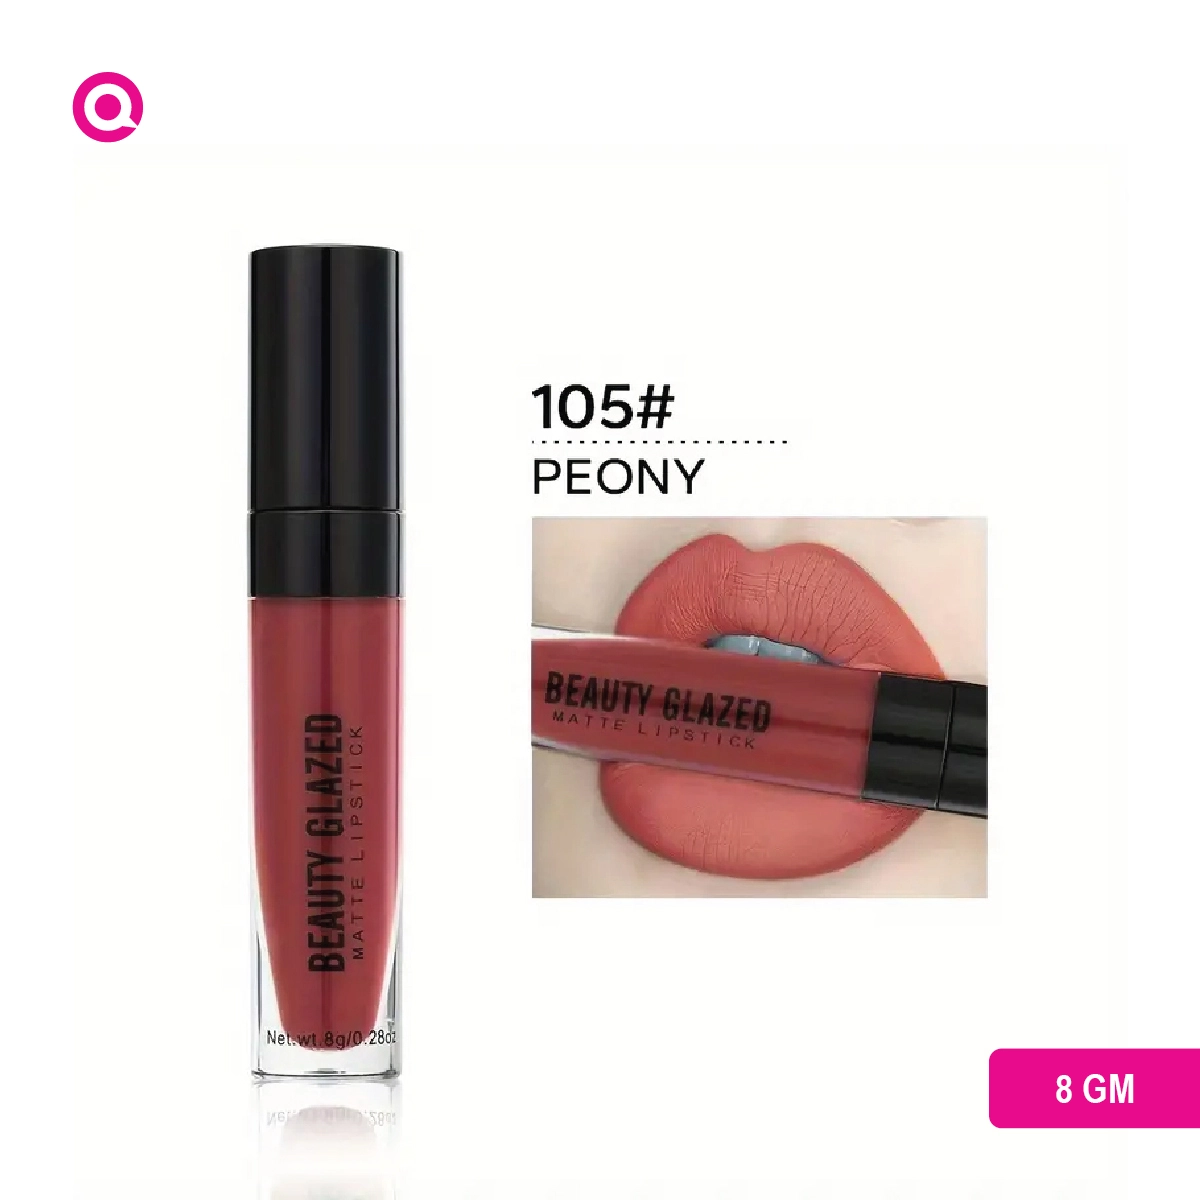 Beauty Glazed Matte Lipstick-PEONY-105